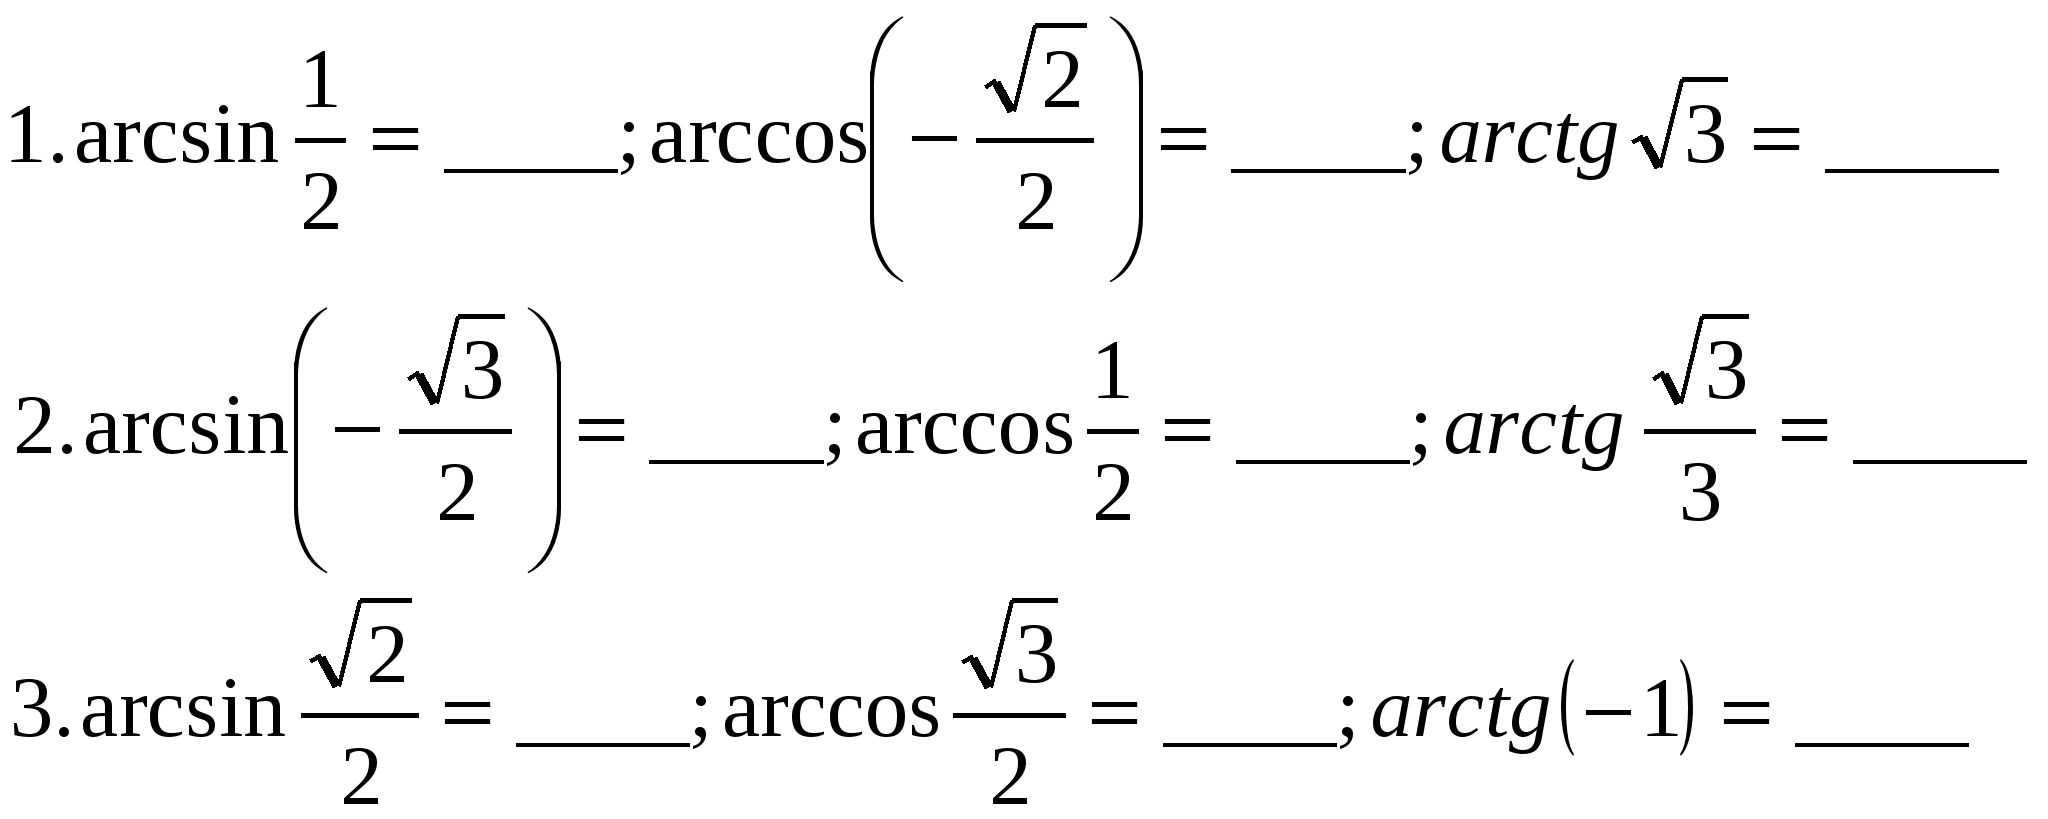 Arctg. Arcsin Arccos. Arcsin и Arccos формулы. Arcsin Arccos arctg arcctg.